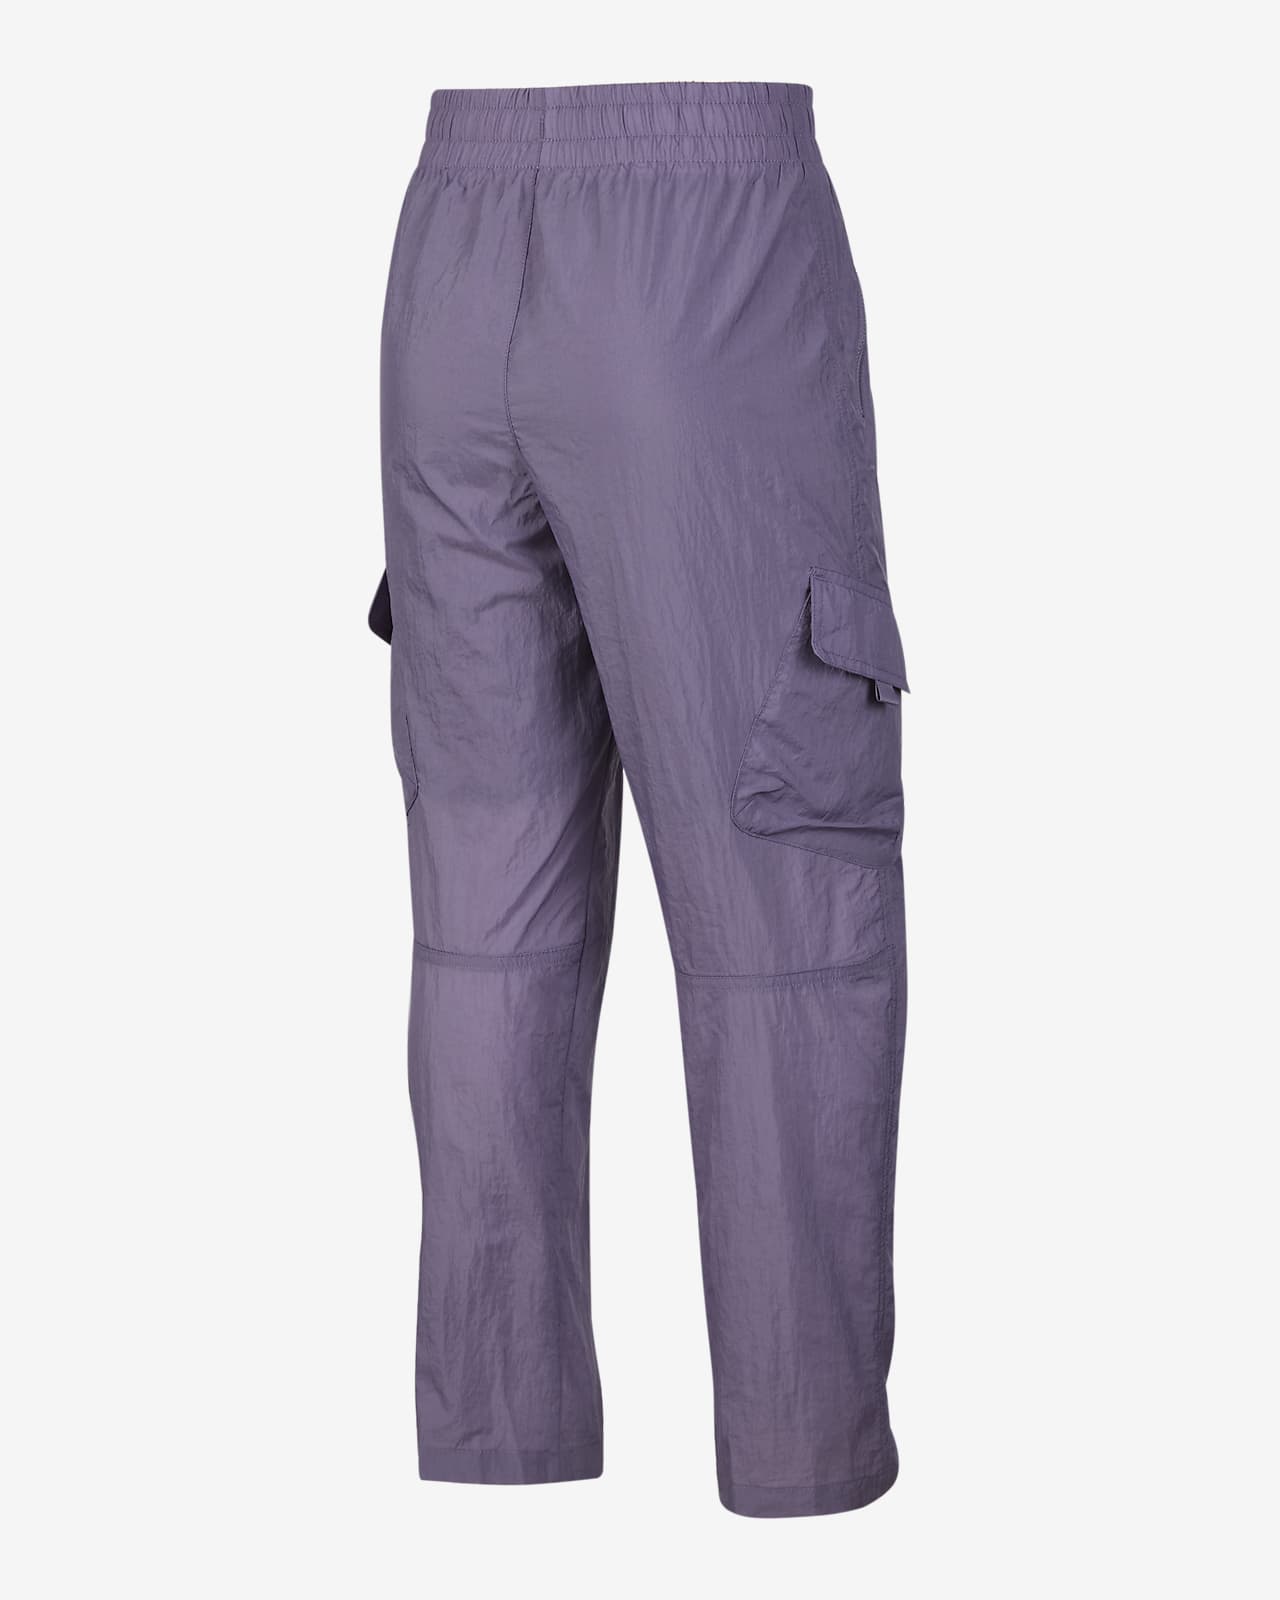 Nike Sportswear Big Kids' (Girls') High-Waisted Woven Cargo Pants.